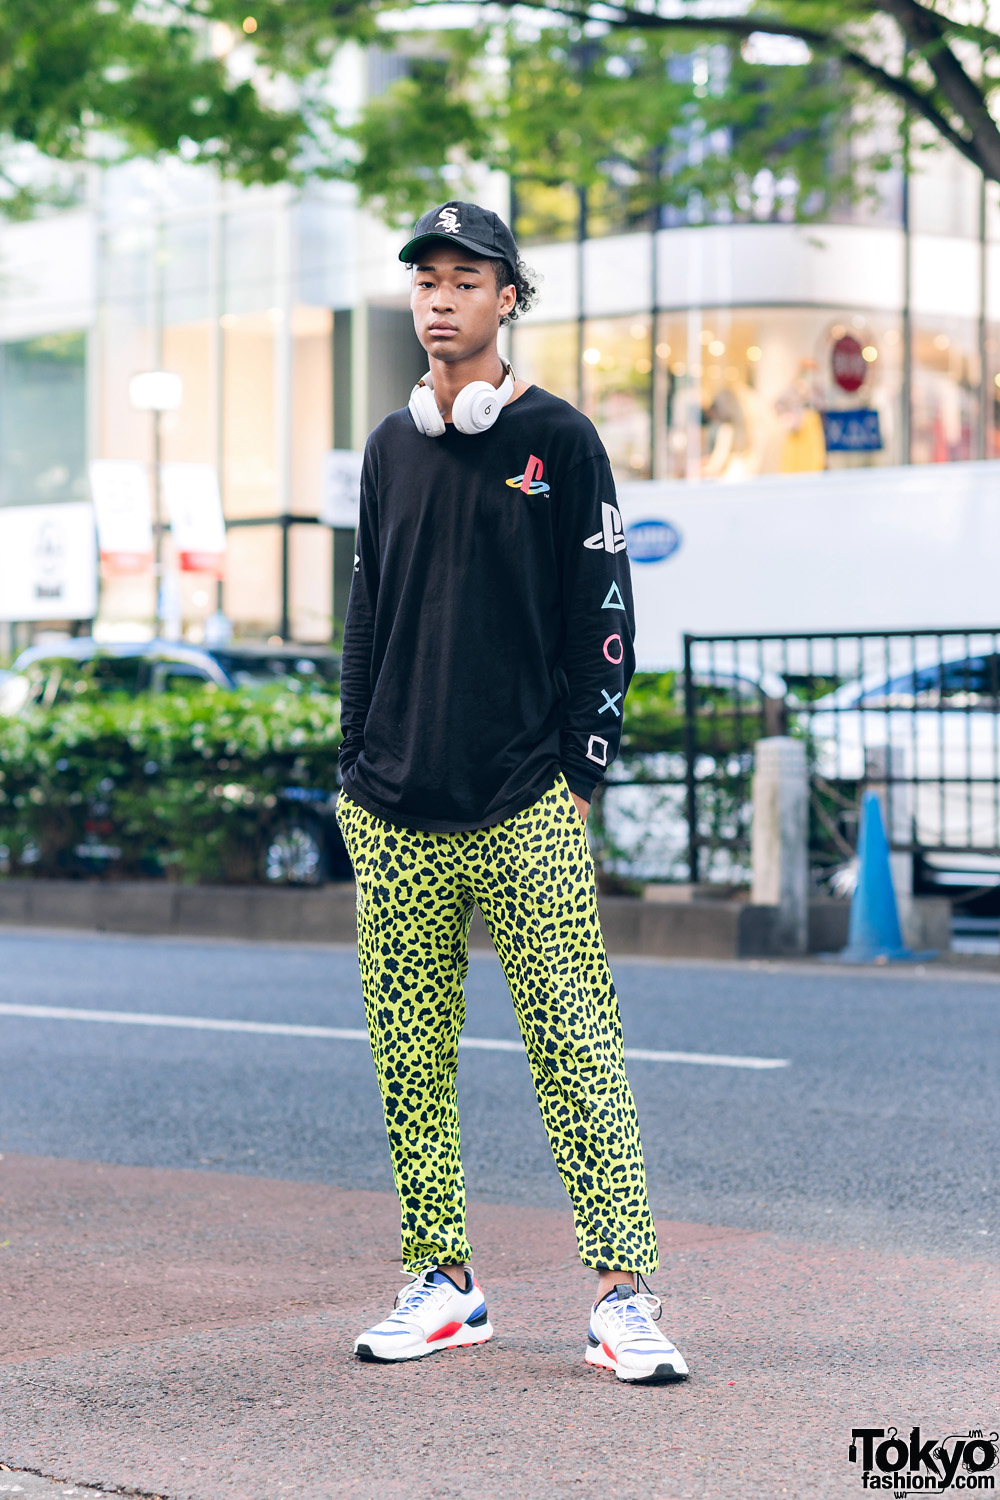 Model's Casual Streetwear Tokyo Fashion w/ Chicago Sox Cap, Headphones, Forever21 Playstation Sweatshirt, Cheetah Print Pants & Puma Sneakers